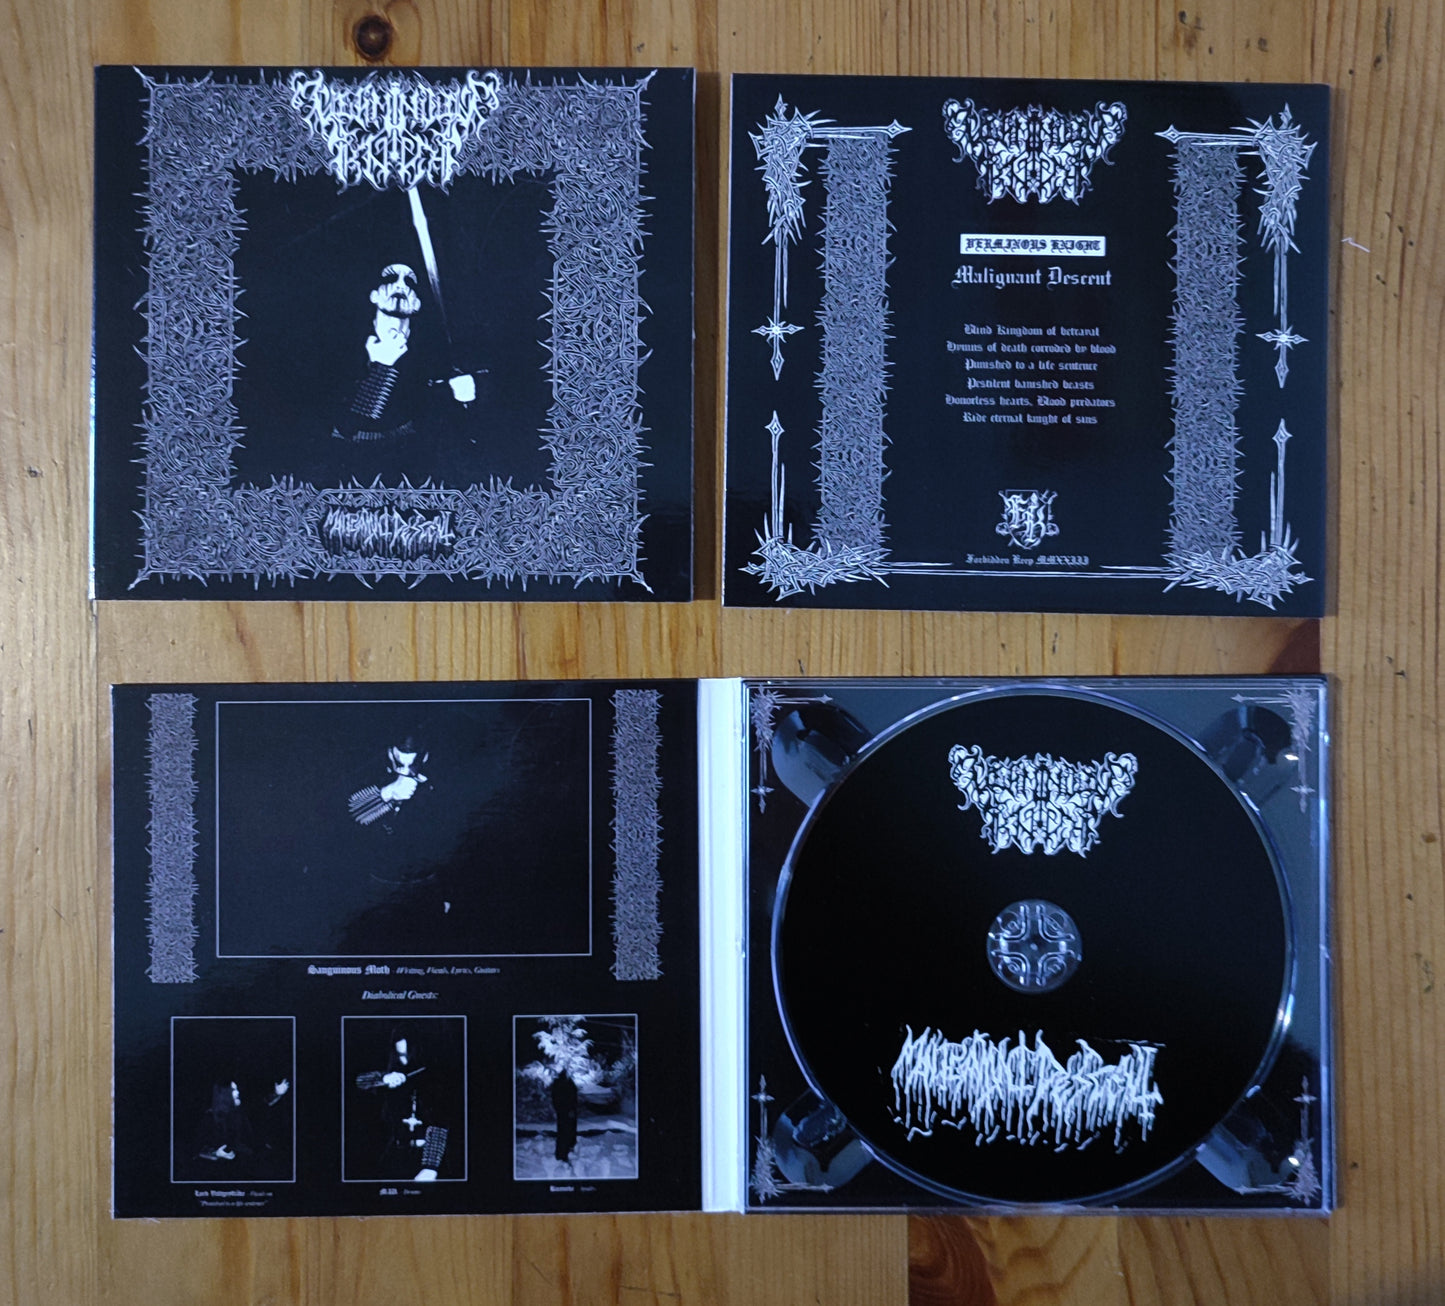 Verminous Knight (ES) "Malignant Descent" - CDs